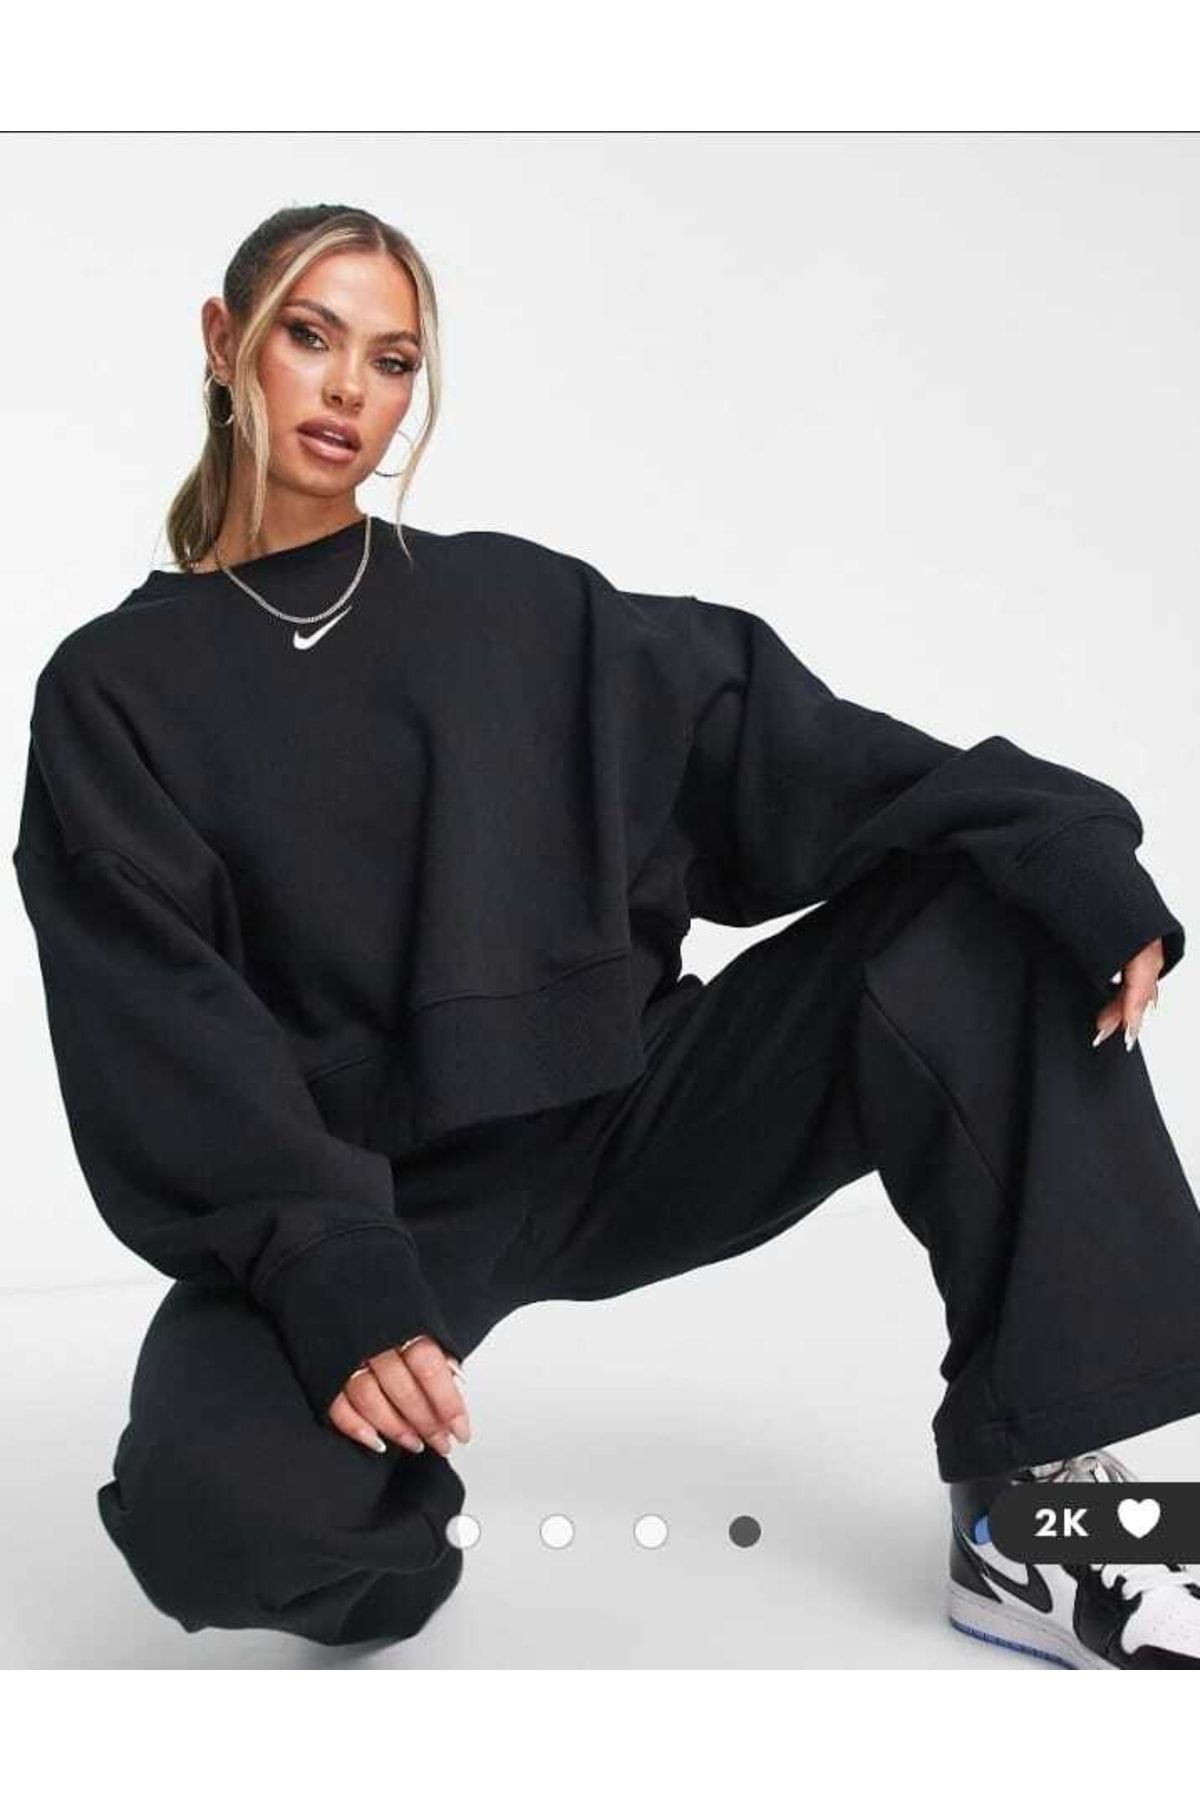 Nike Sportswear Collection Essentials Kadın Siyah Sweatshirt